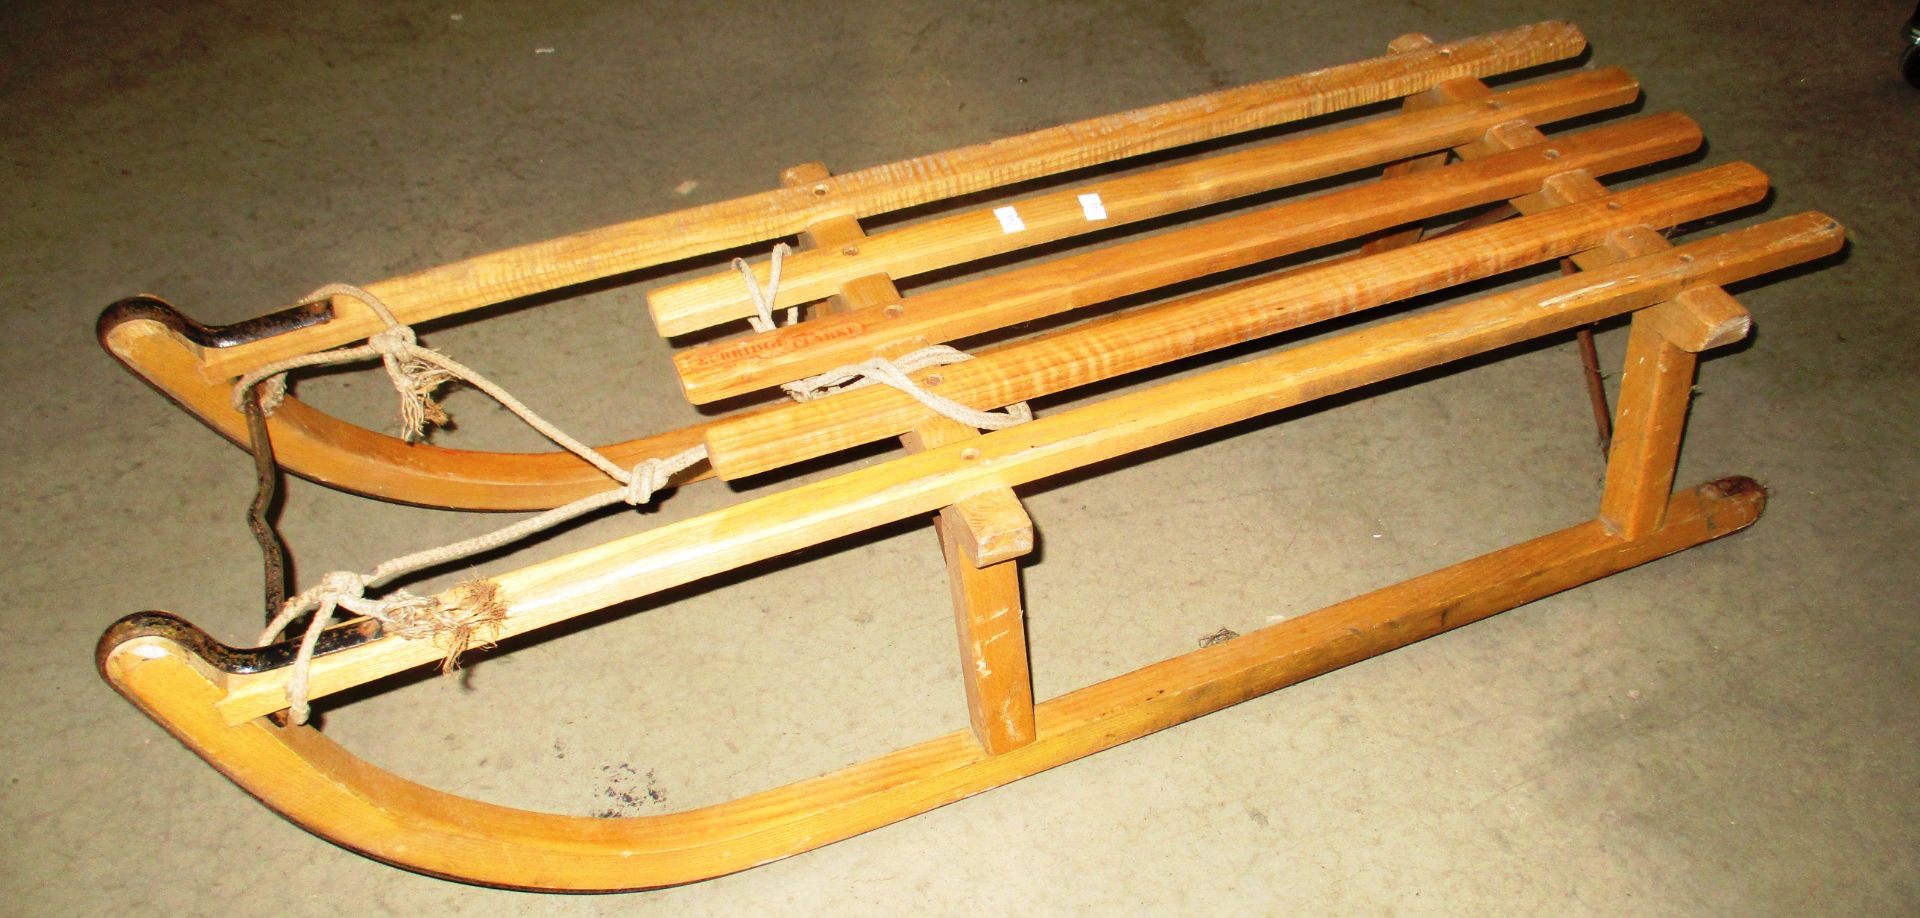 A traditional wooden toboggan/sledge